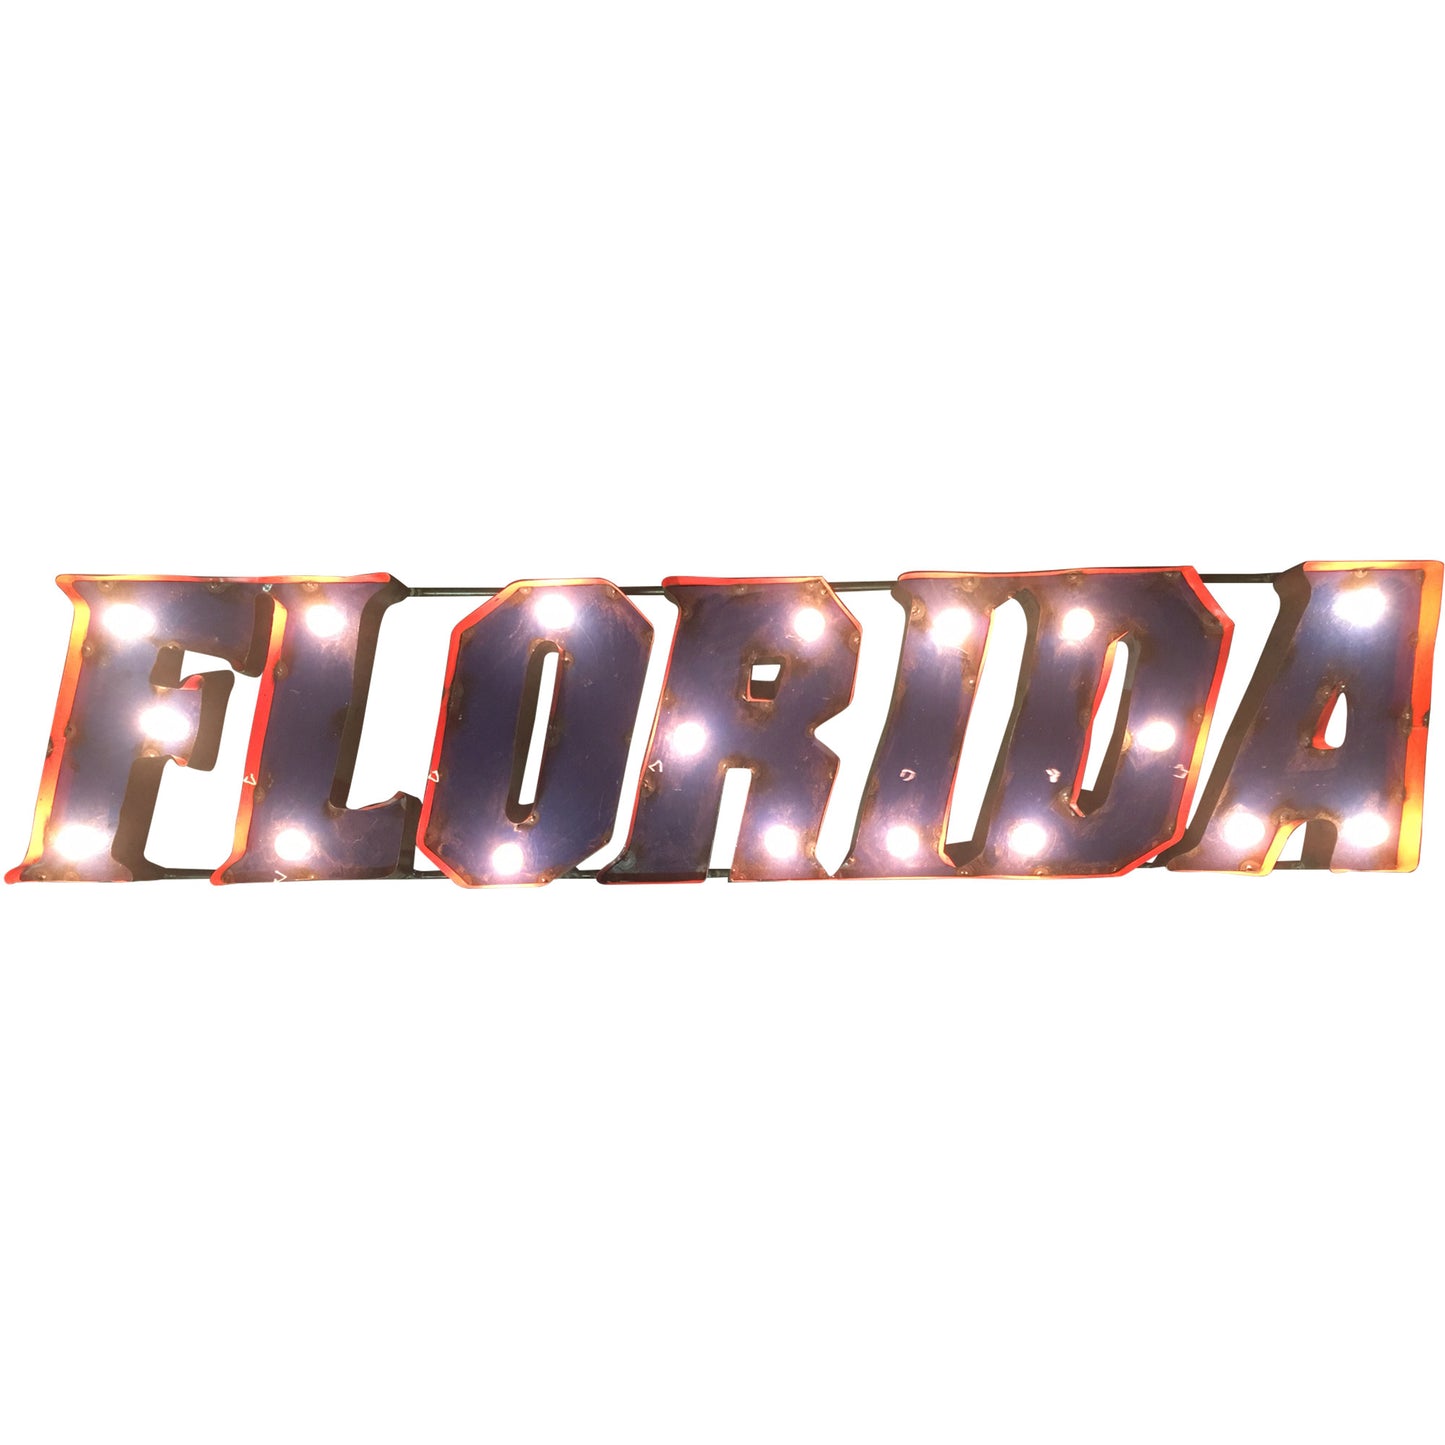 University of Florida "Florida" Lighted Recycled Metal Wall Decor